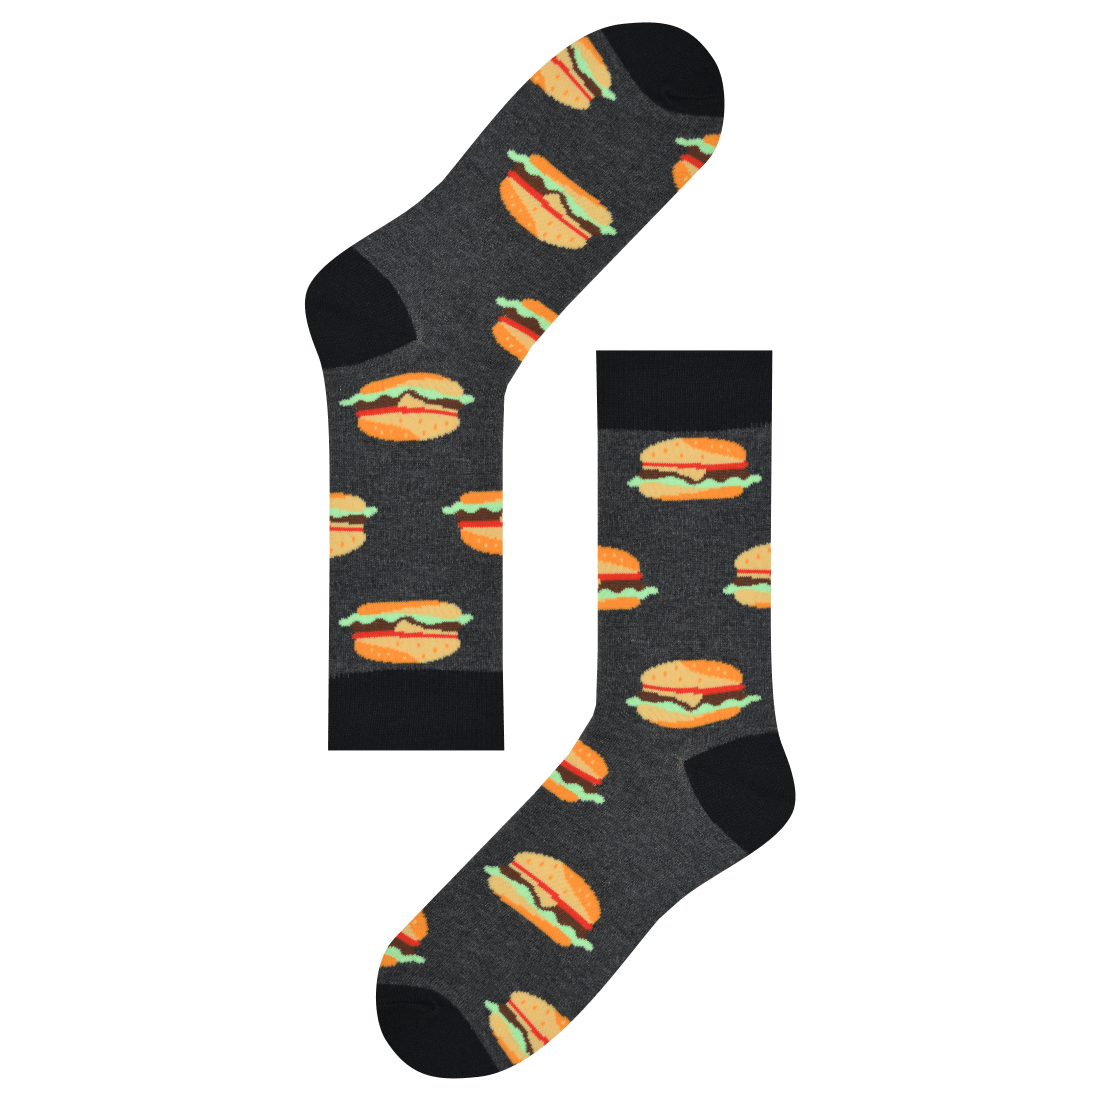 Medias Locas calcetines divertidos de hamburguesa Freaky Socks. medias hamburguesa